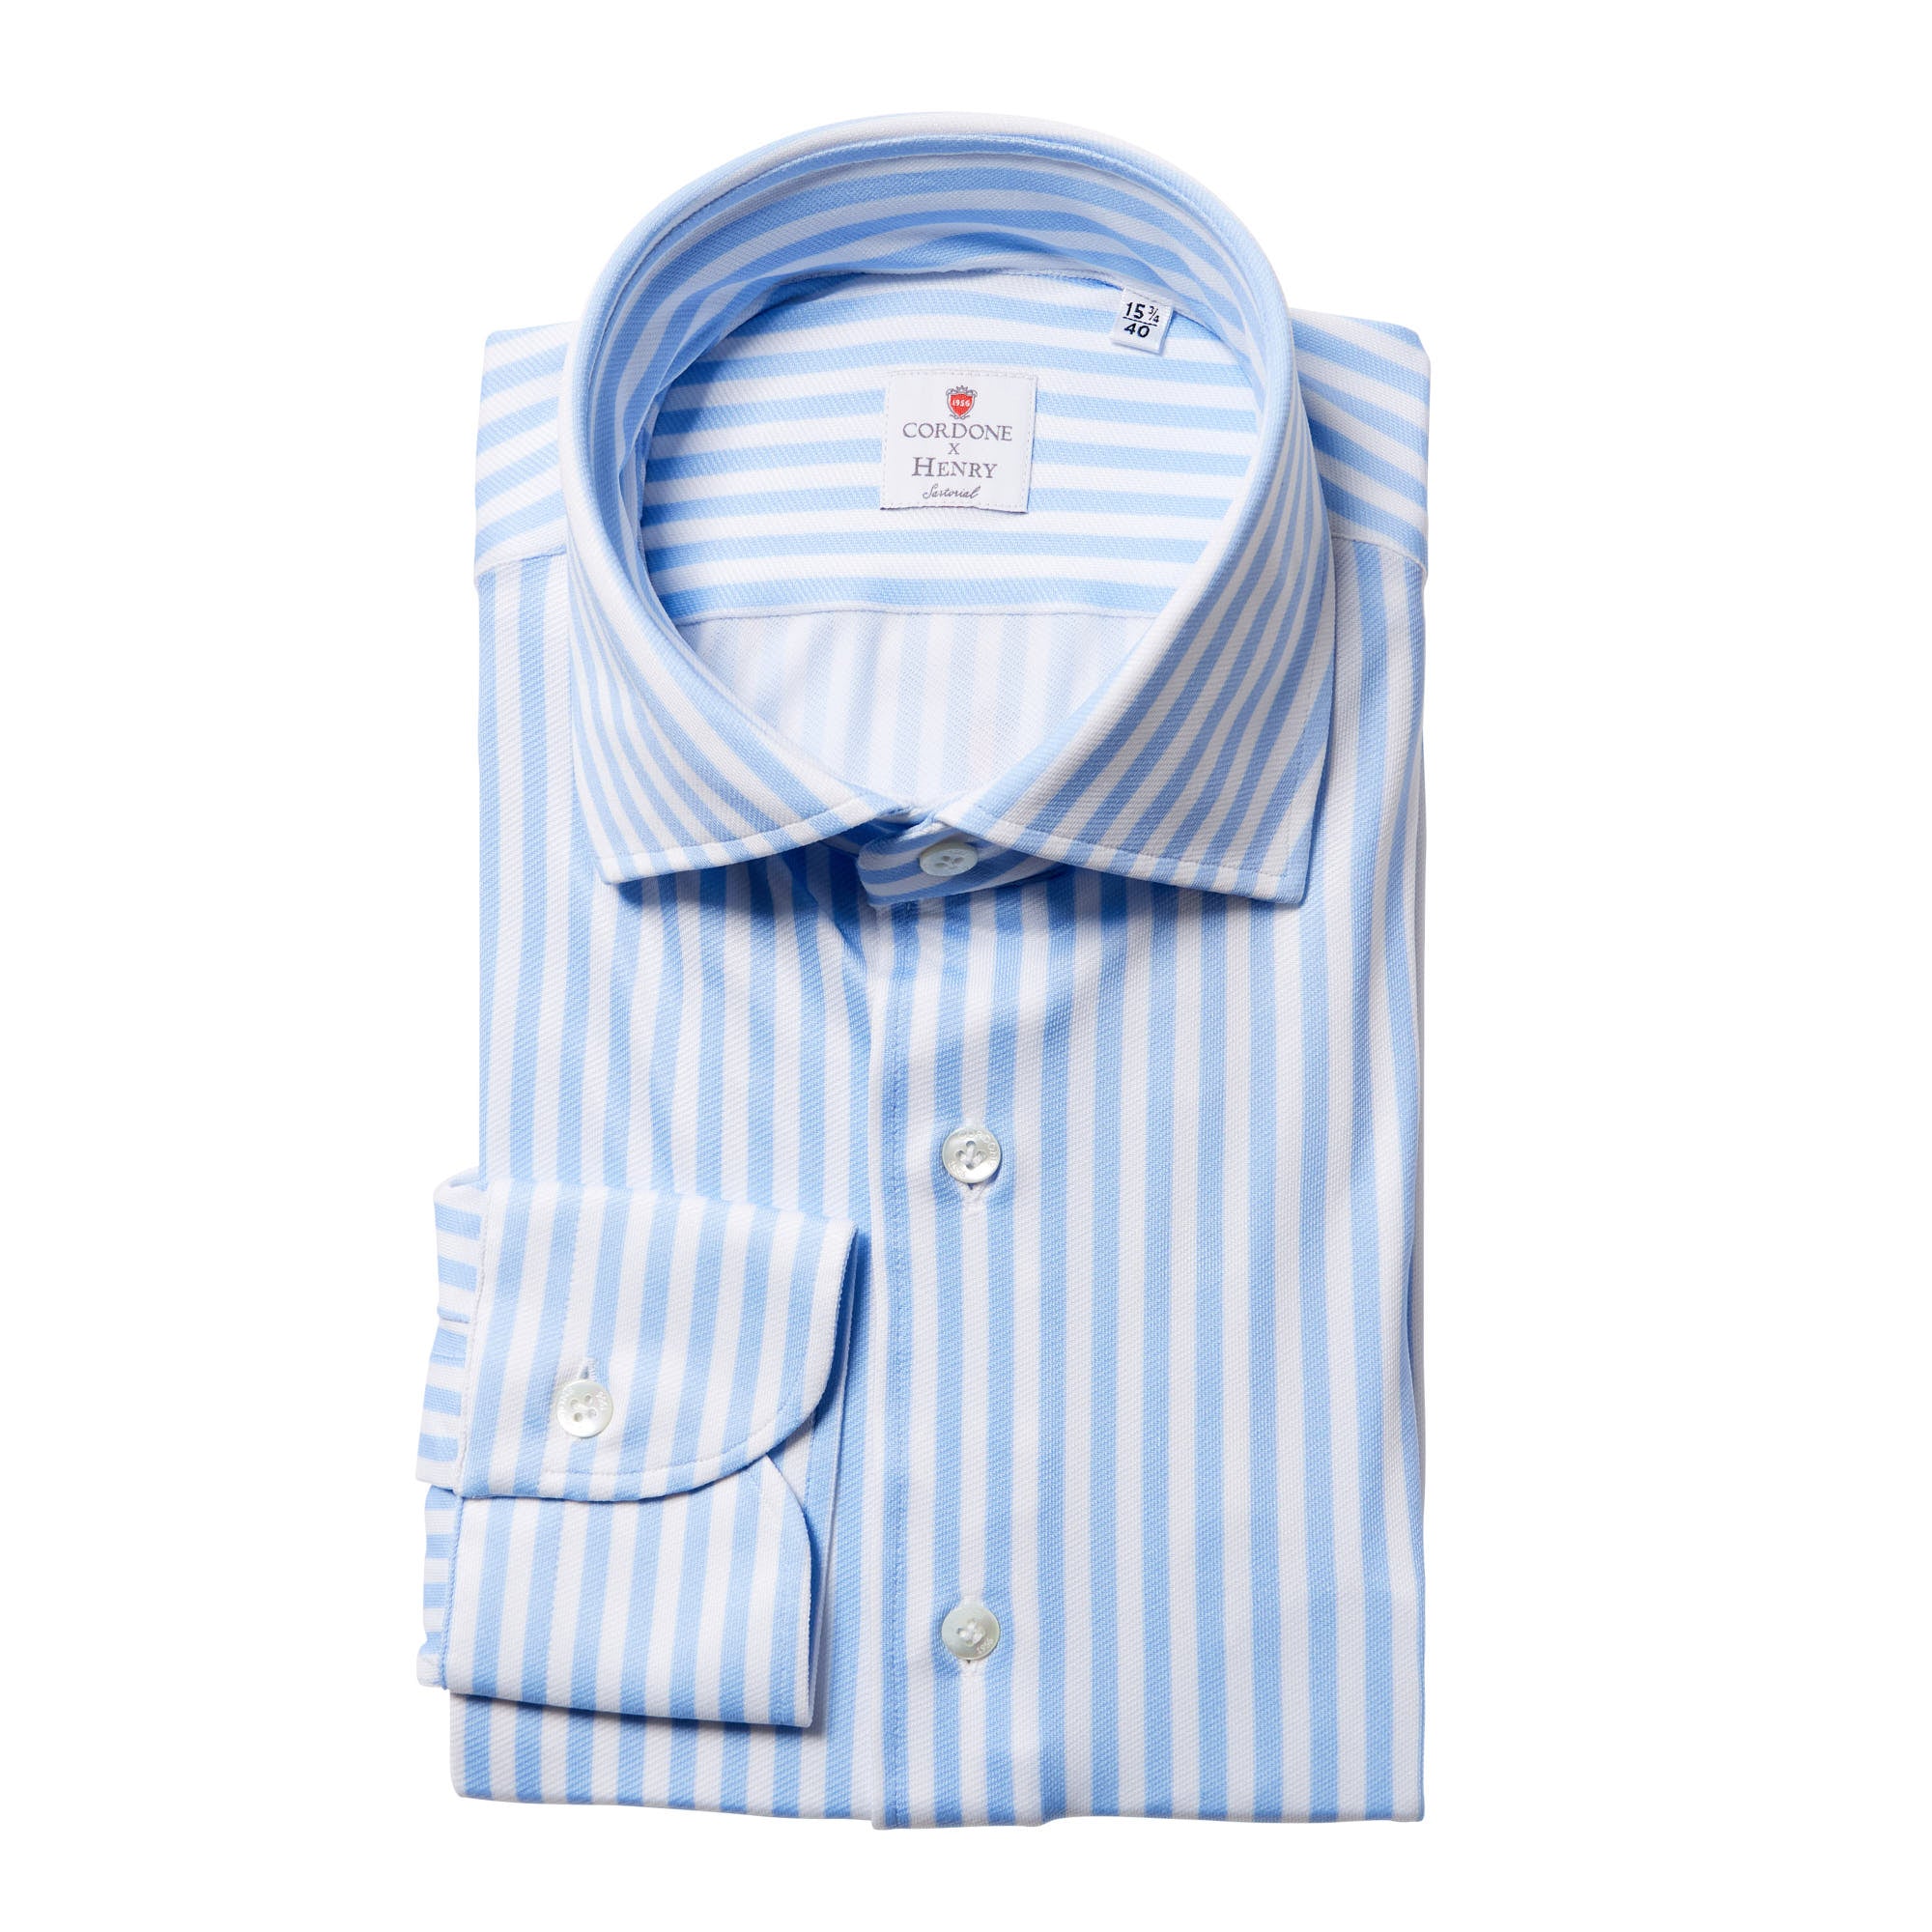 CORDONE Striped Round Neck Shirt Single Cuff Classic Fit WHITE/SKY - Henry BucksShirts38AW240074 - WHTSKY - SC - CLAS - 39